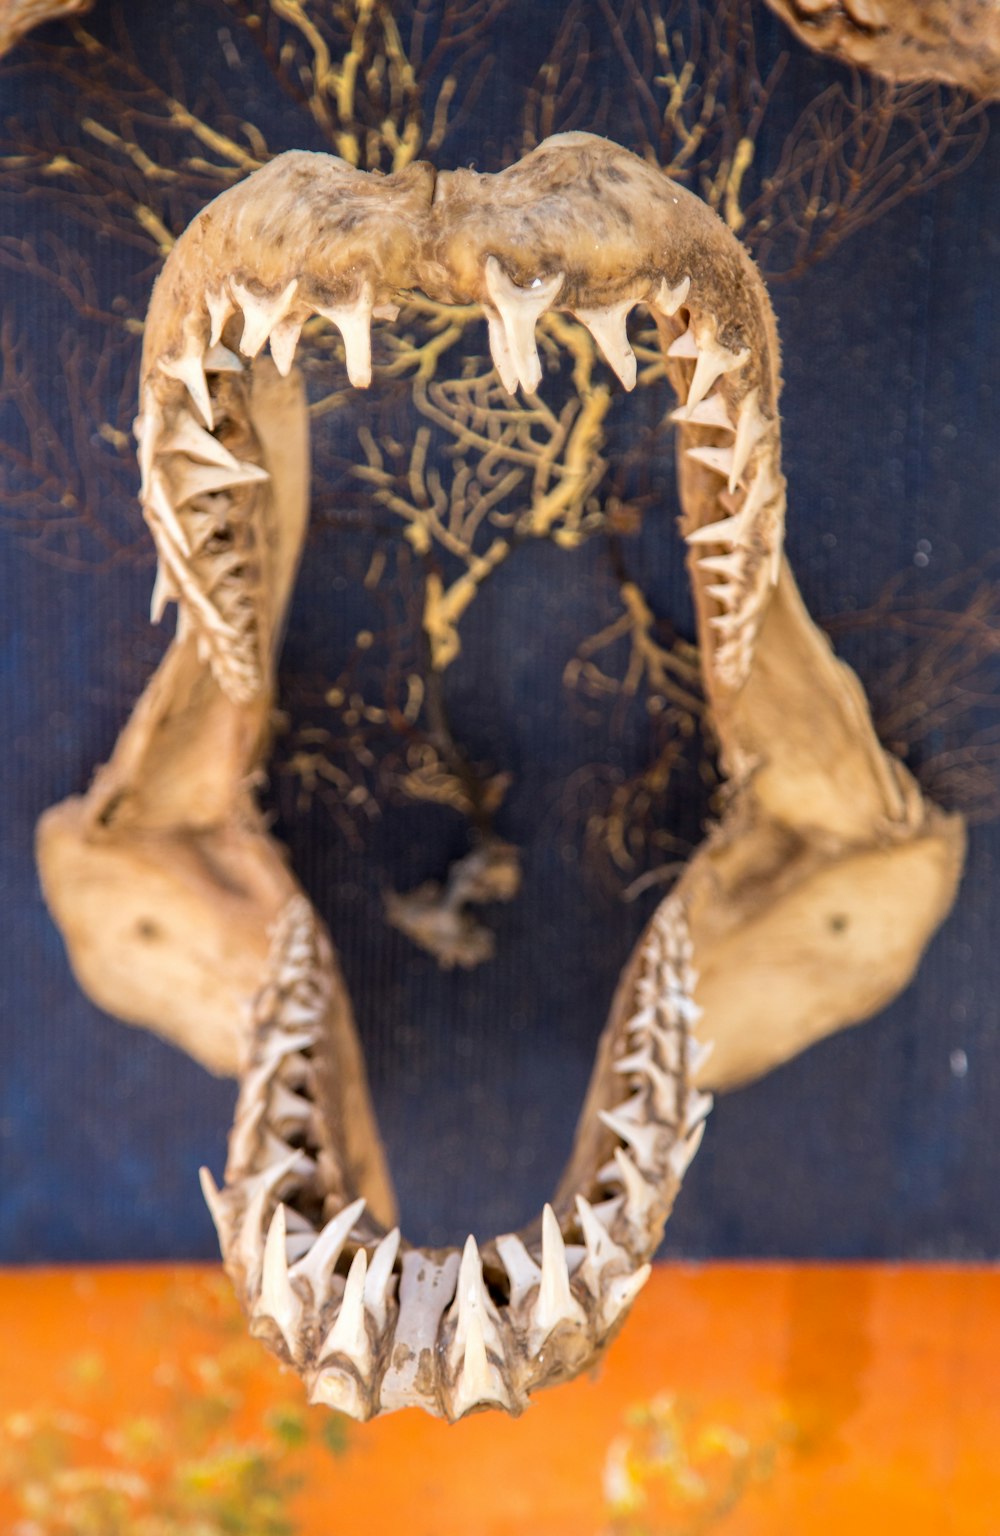 jaw bone skeleton of a shark